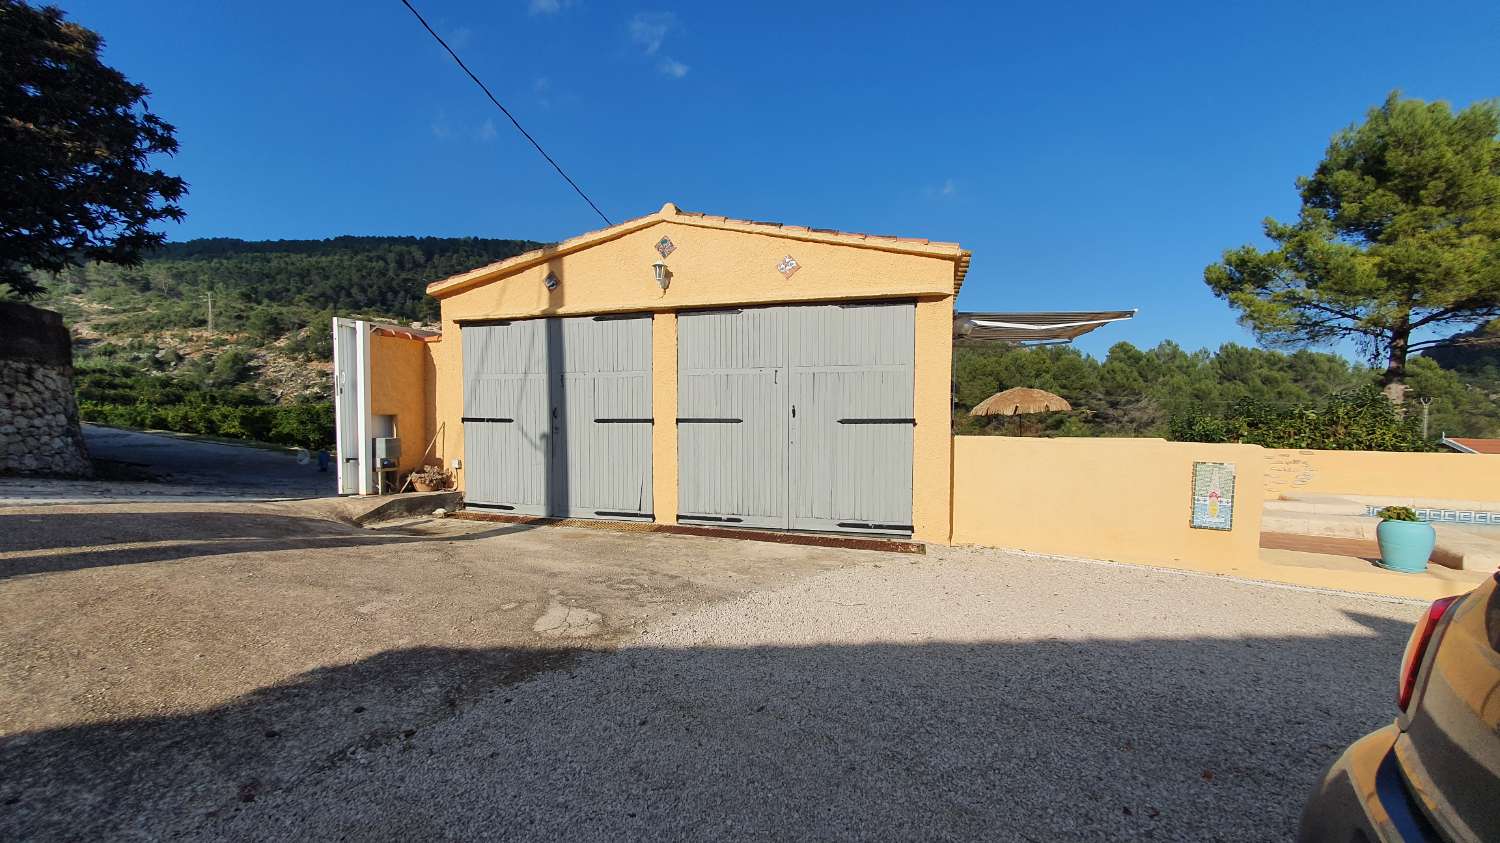 Villa for sale in Oliva pueblo